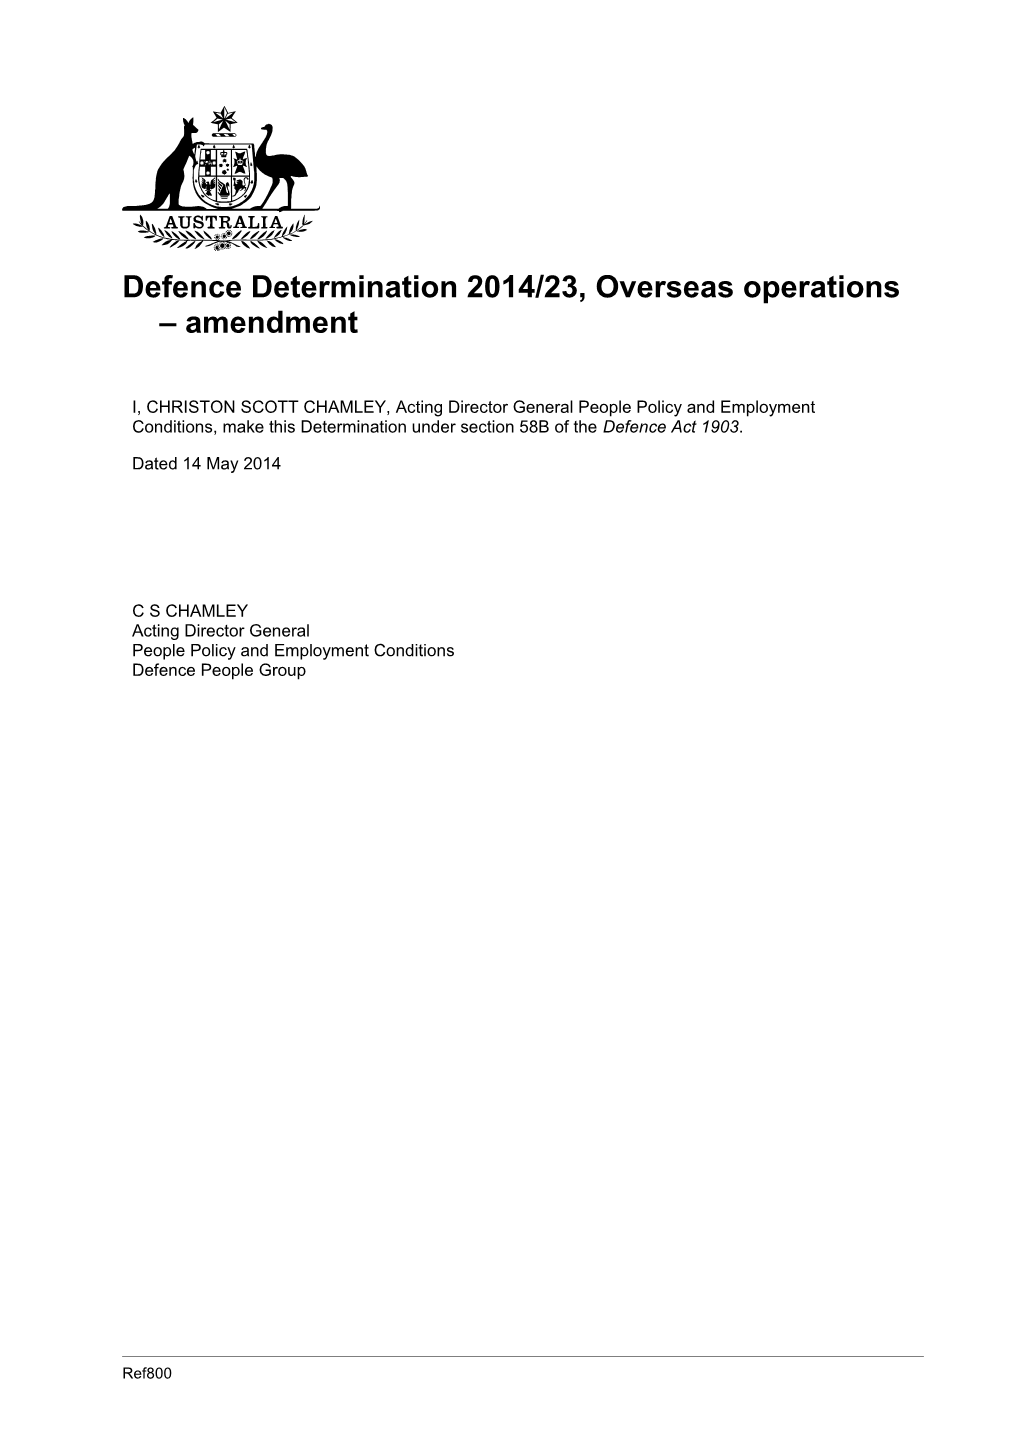 Defence Determination 2014/23, Overseas Operations Amendment